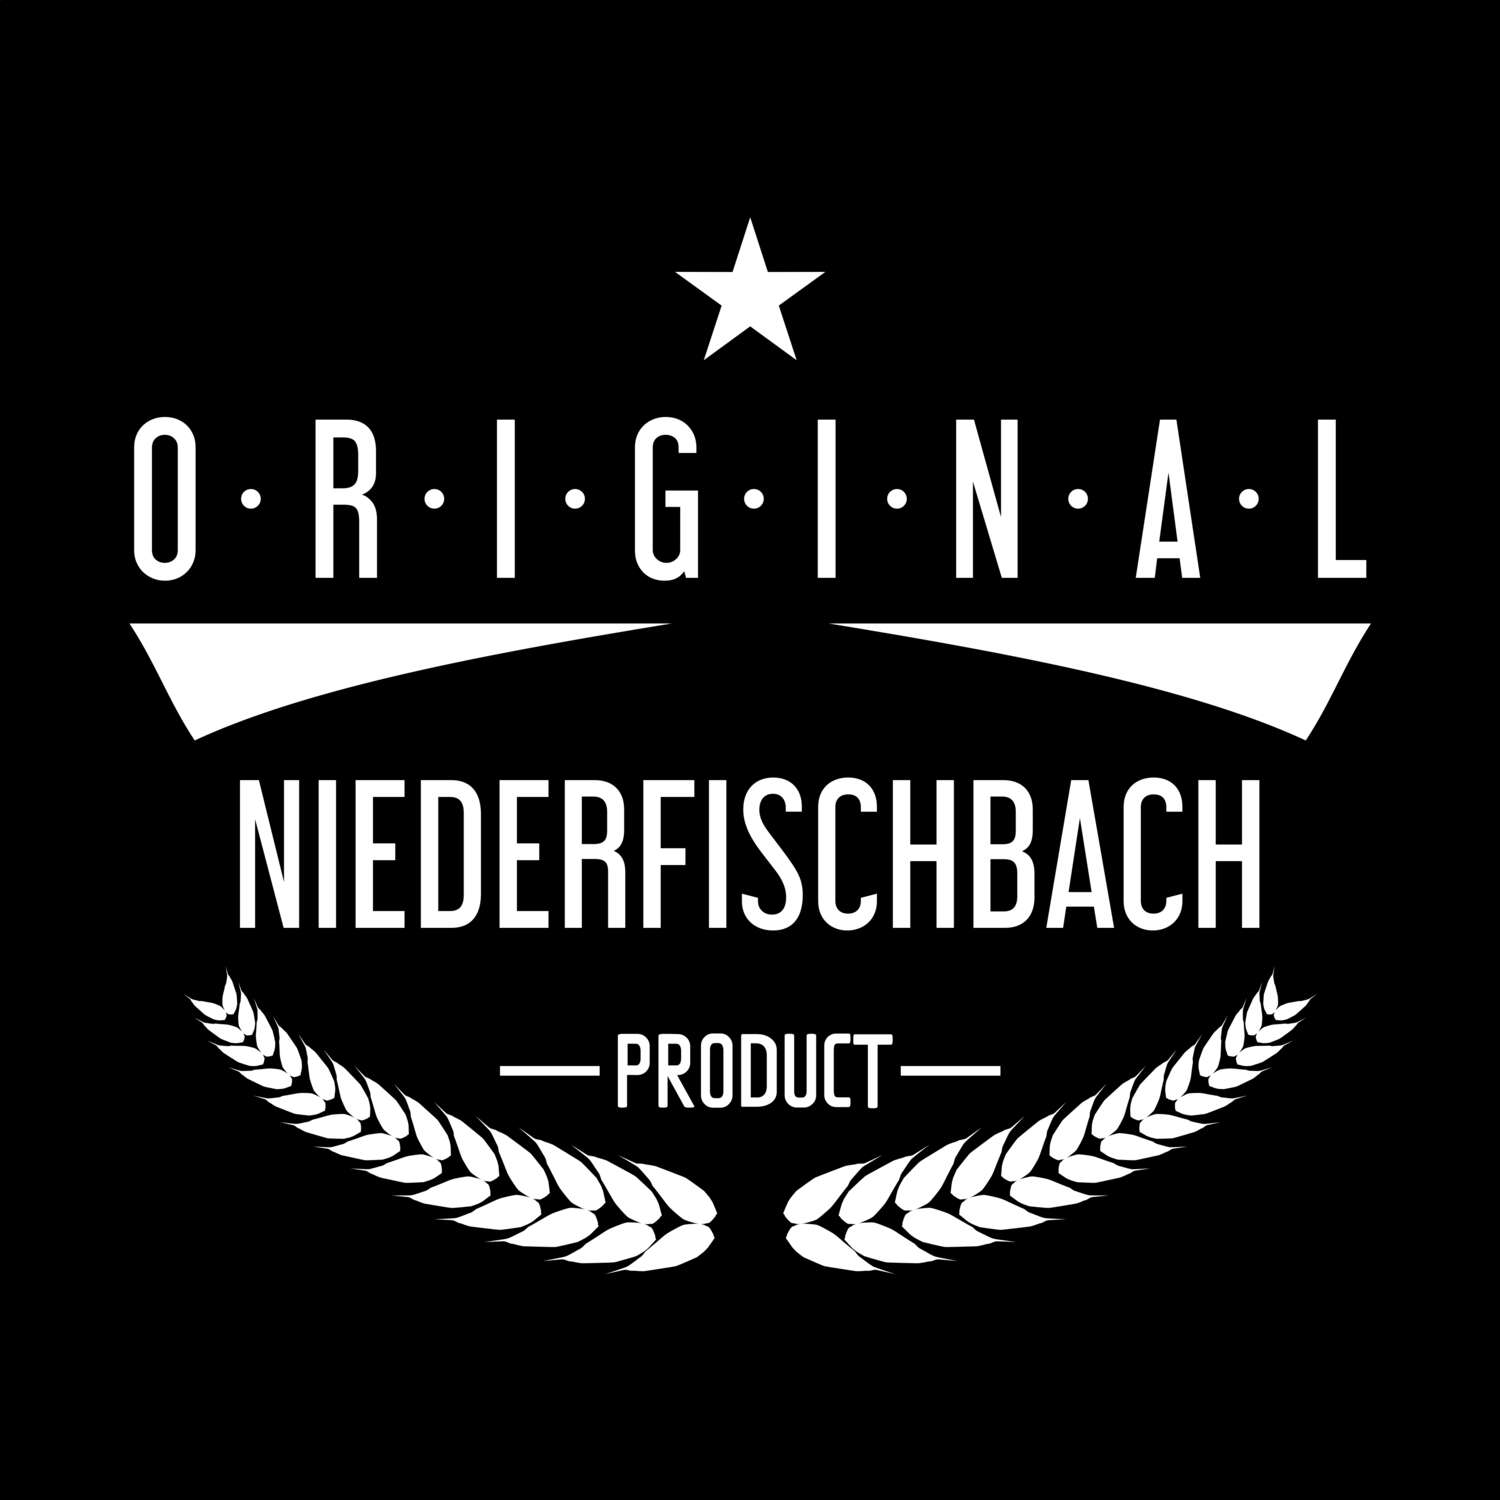 Niederfischbach T-Shirt »Original Product«